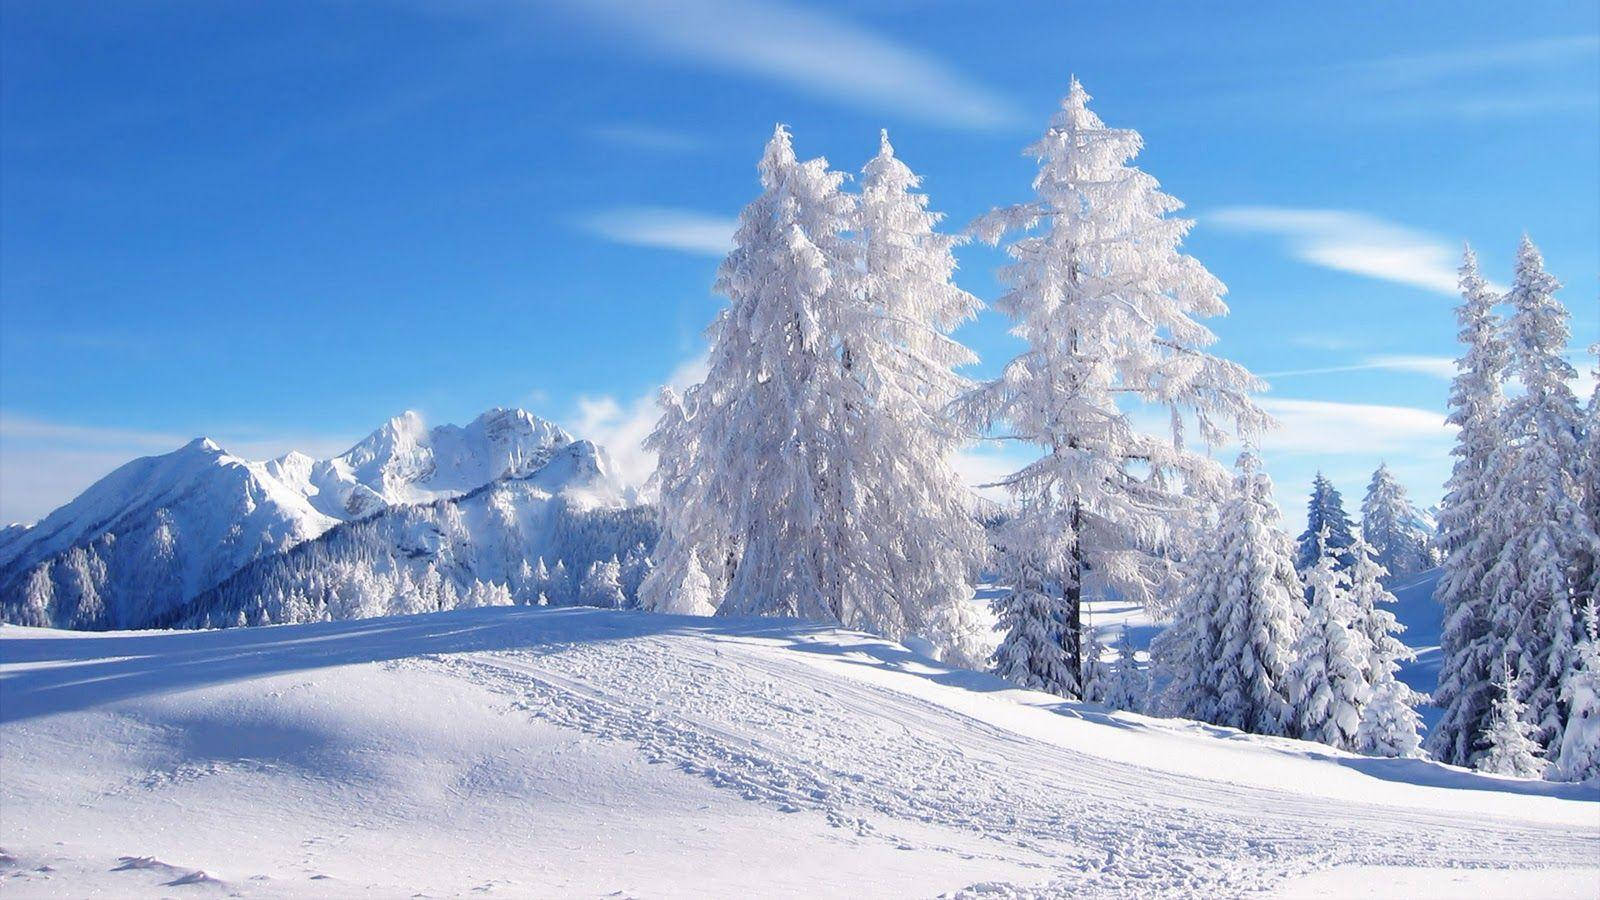 Romania Mountains Winter Scenery Wallpaper